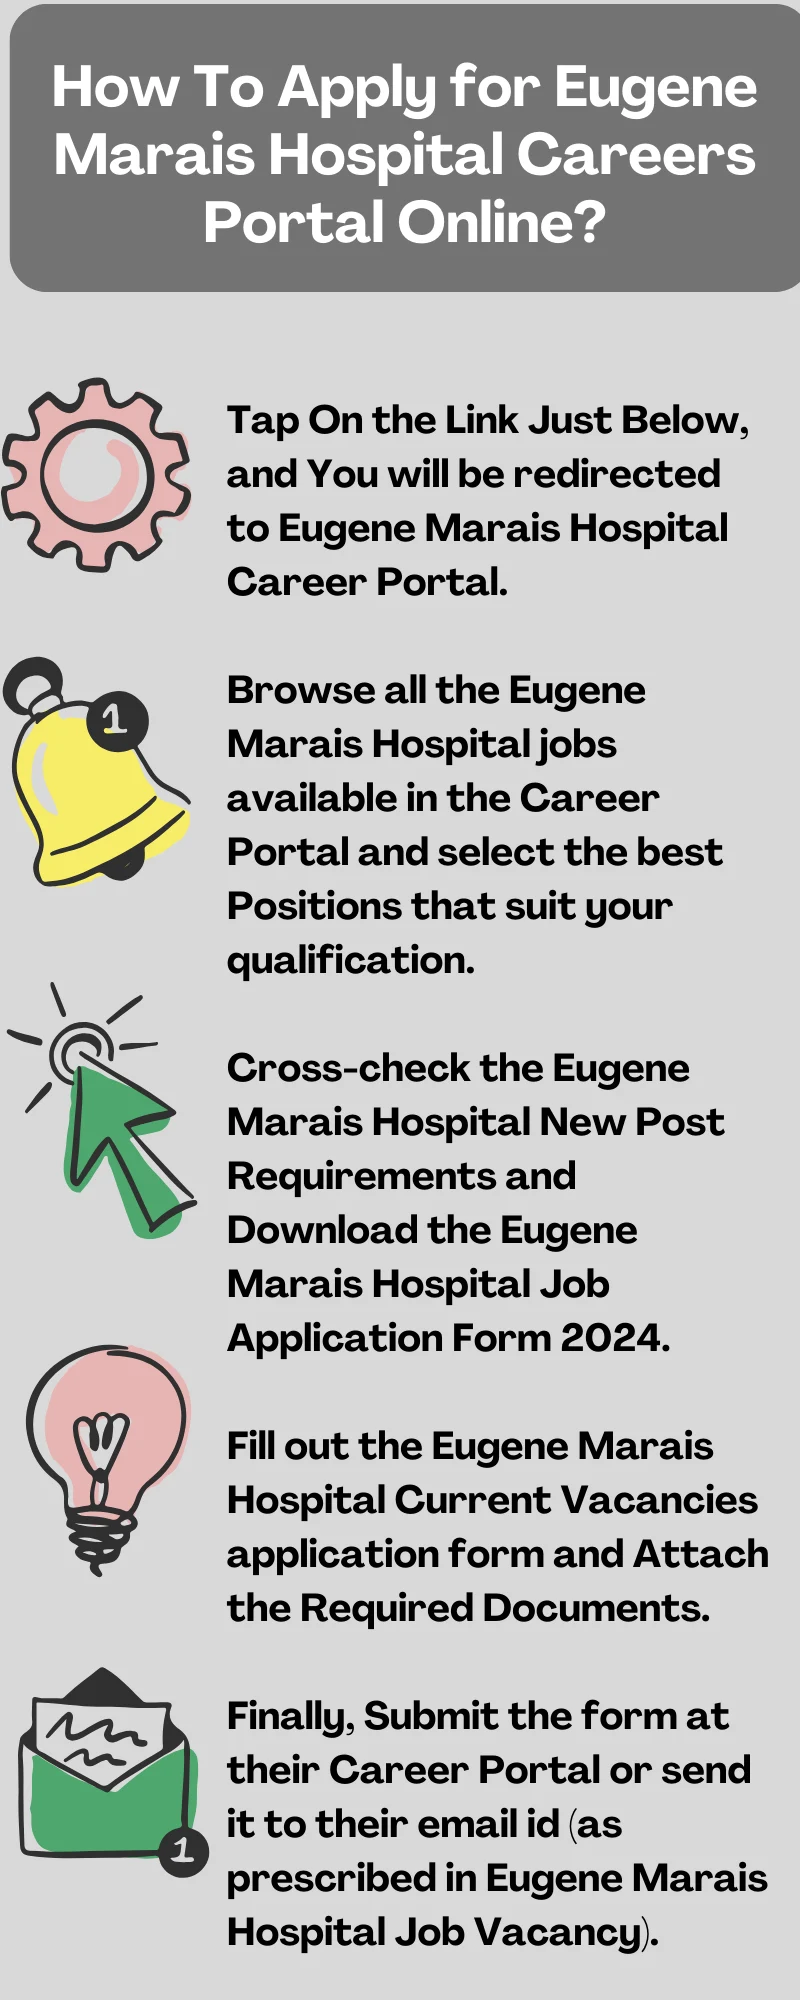 How To Apply for Eugene Marais Hospital Careers Portal Online?